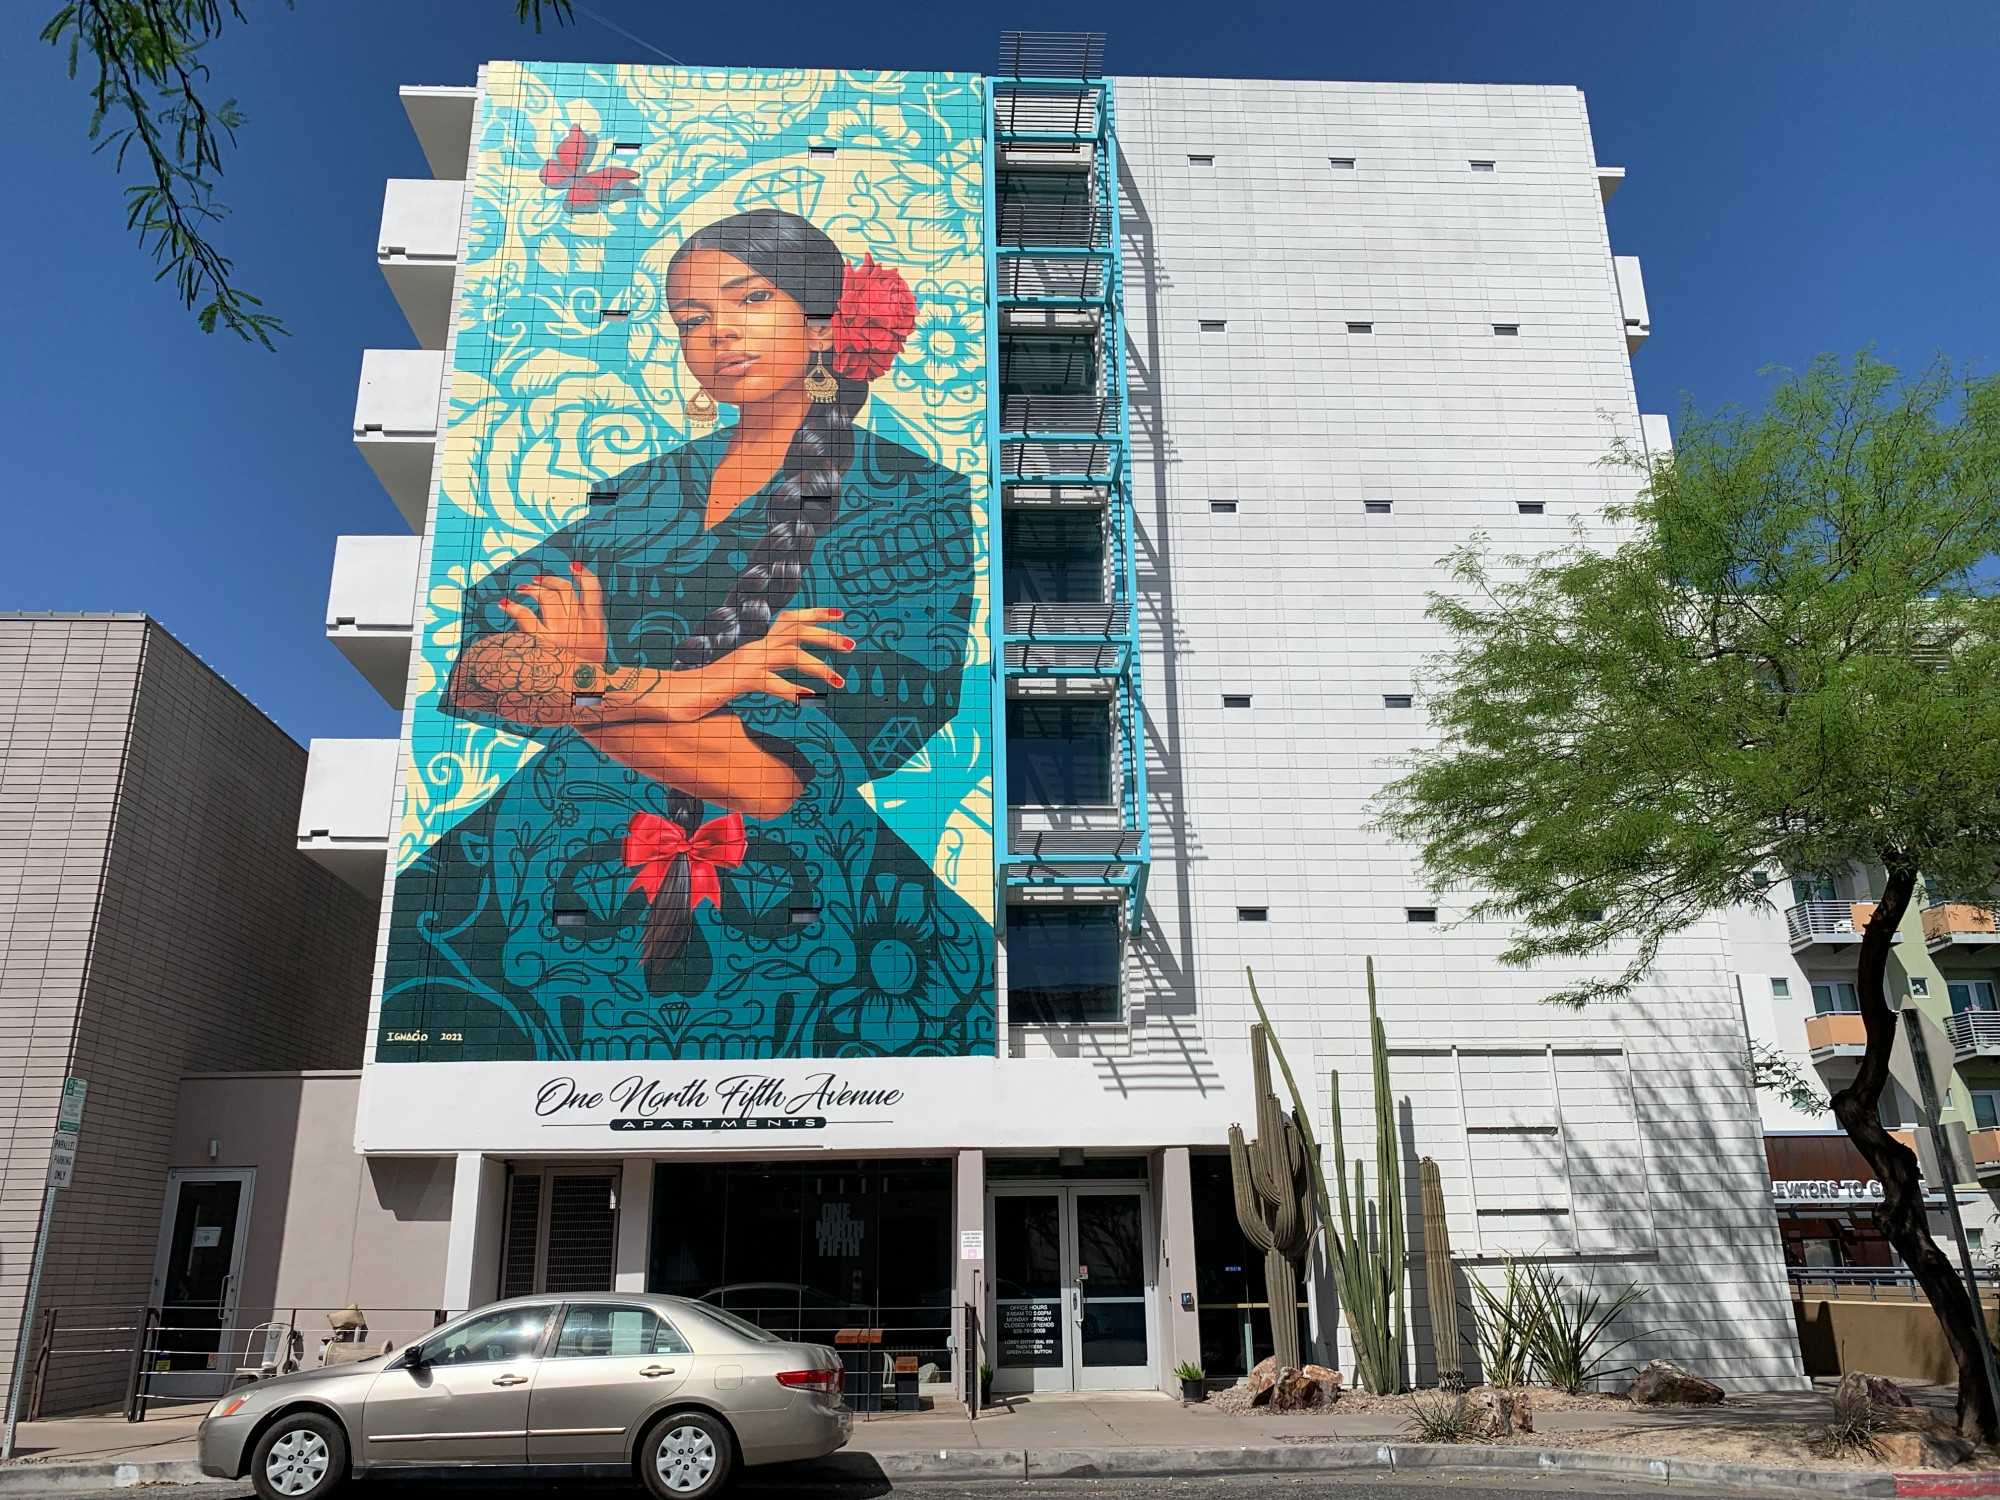 La Mujer Empoderada by Ignacio Garcia 2022 sponsored by LoveBlock Partners. 5th Street and Congress downtown Tucson, AZ. (Photograph by Lizette Arias)